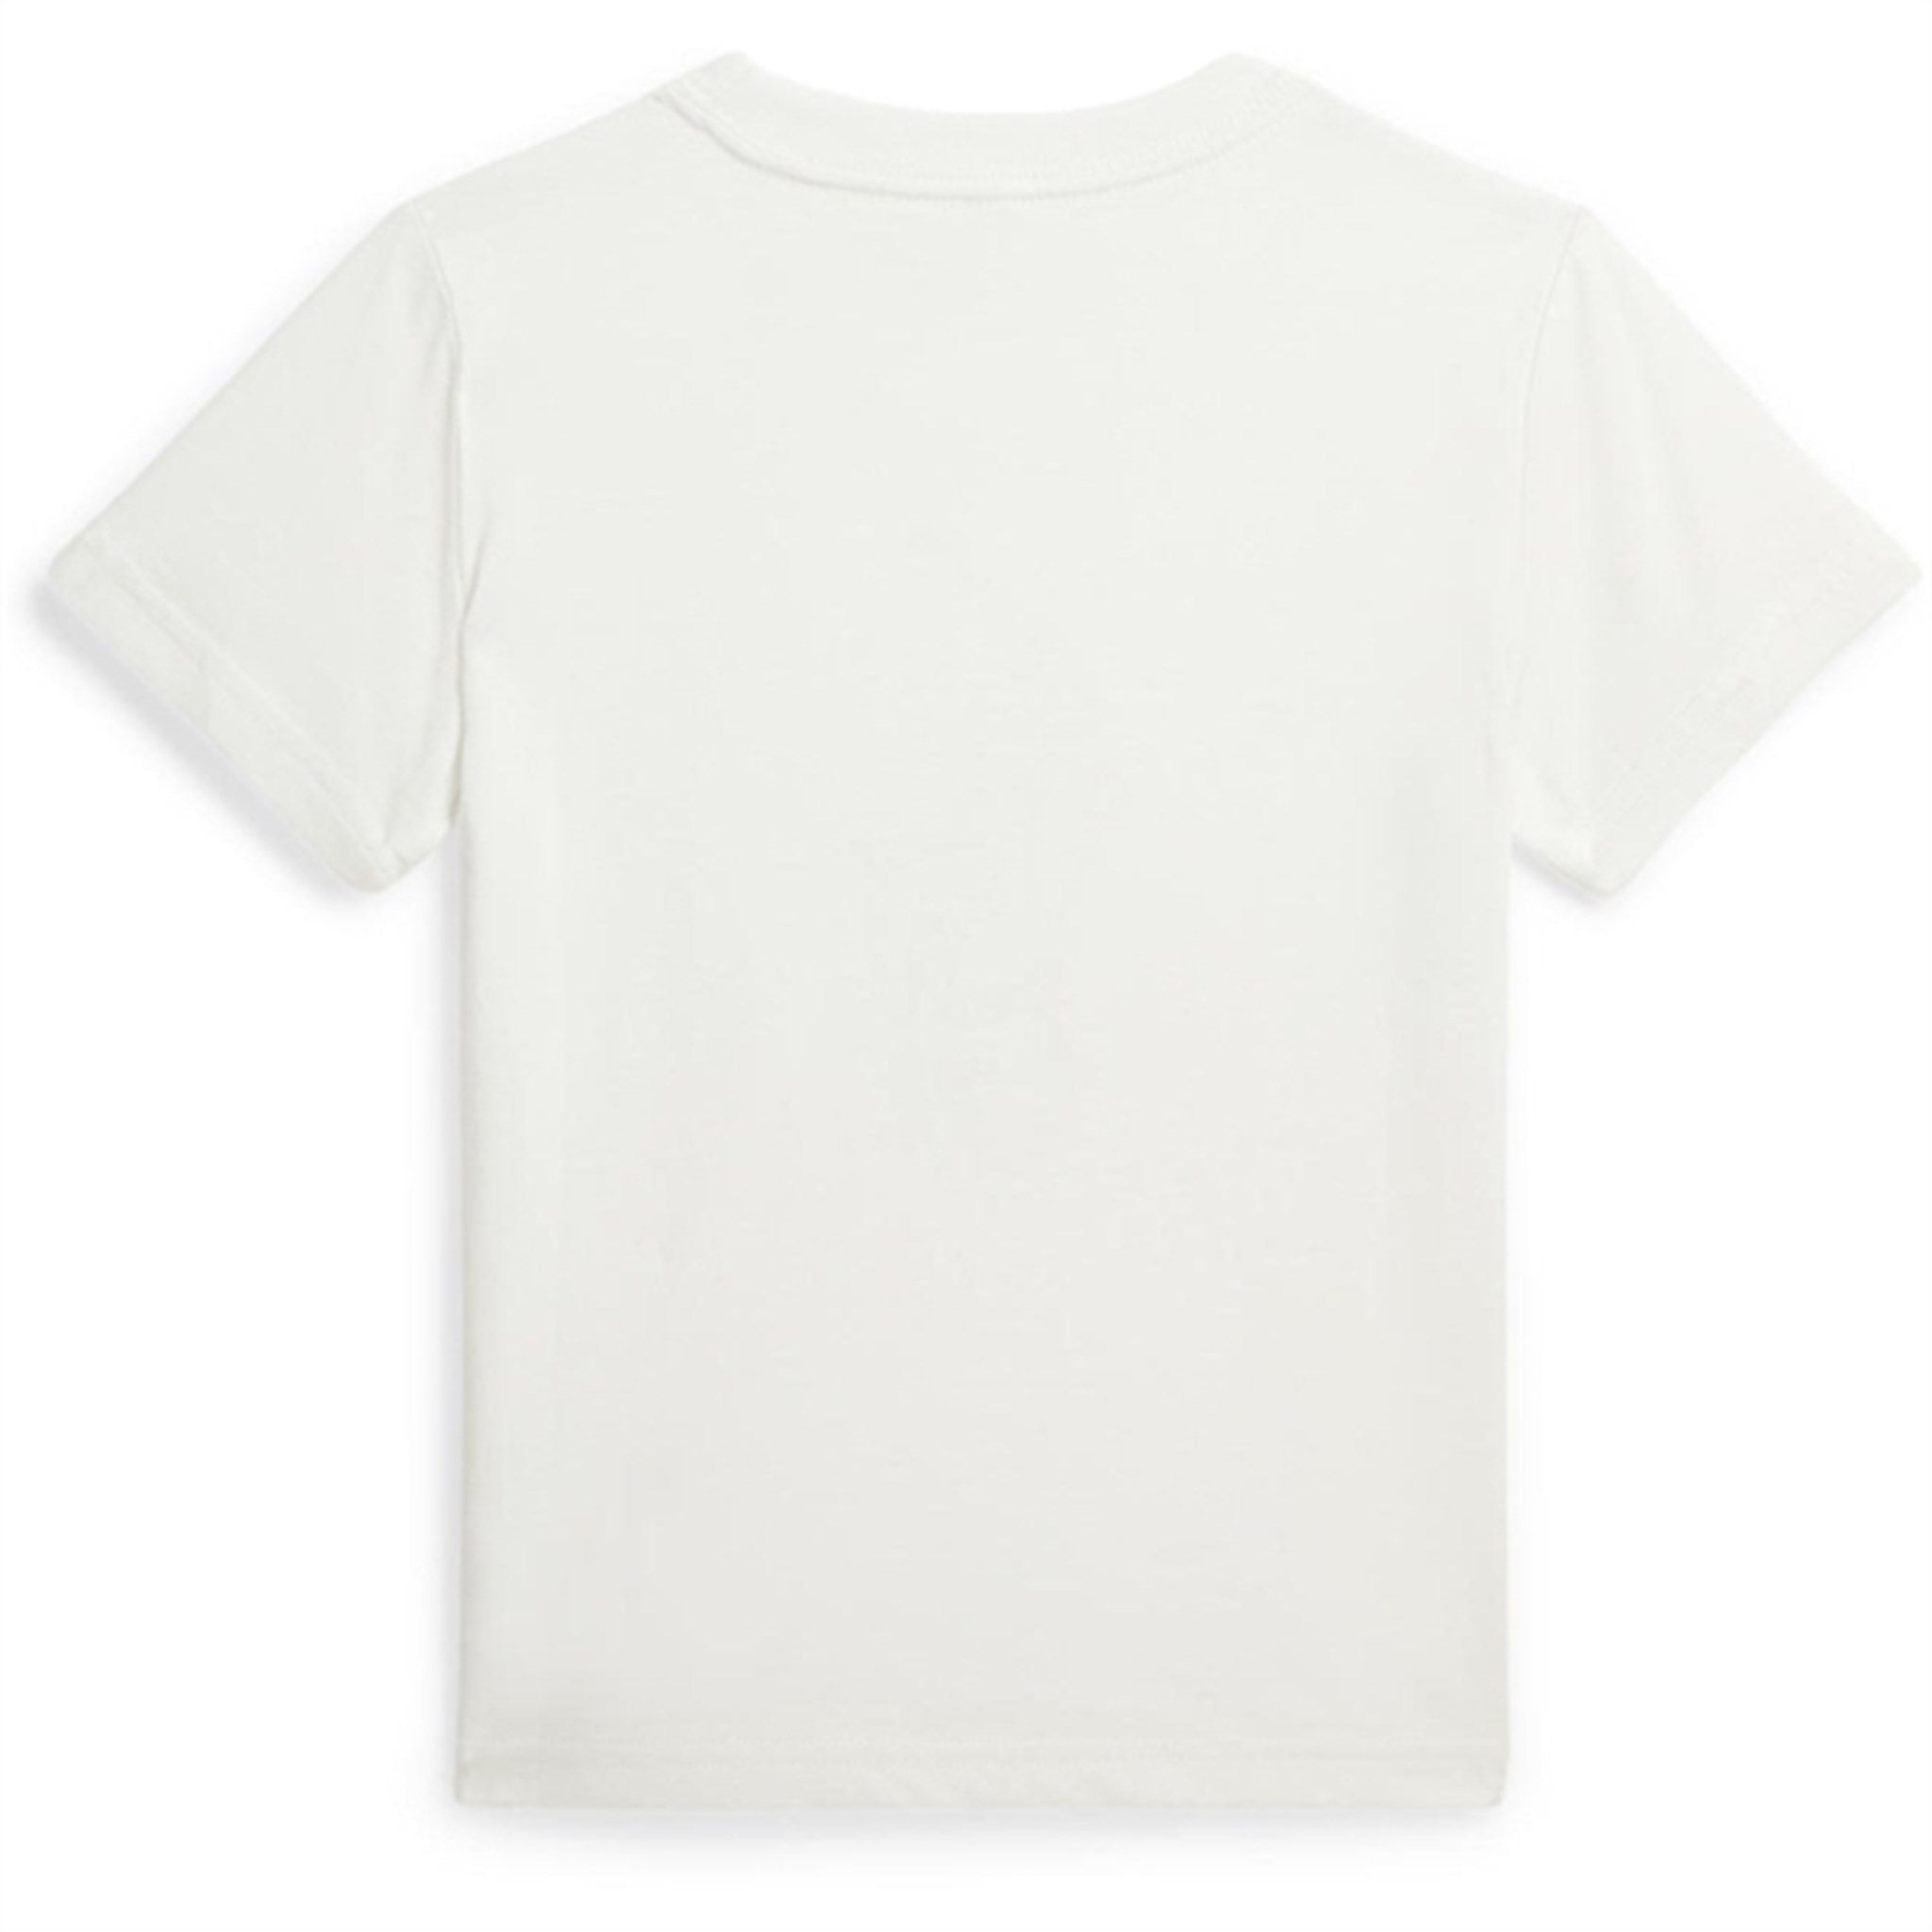 Polo Ralph Lauren Boys T-Shirt Deckwash White 2